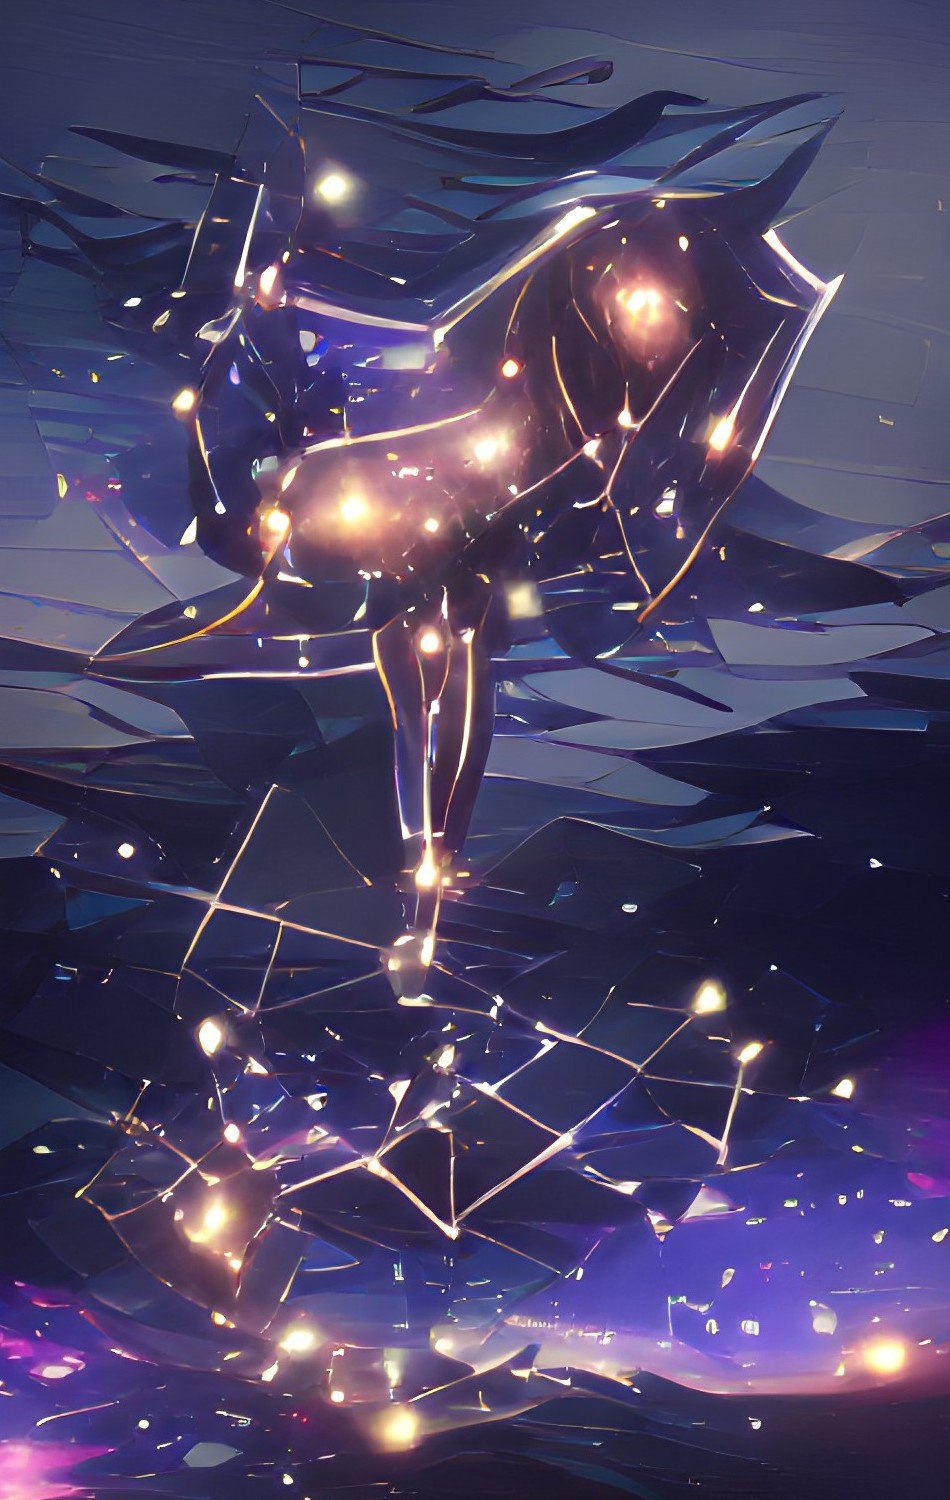 Constellation.jpg